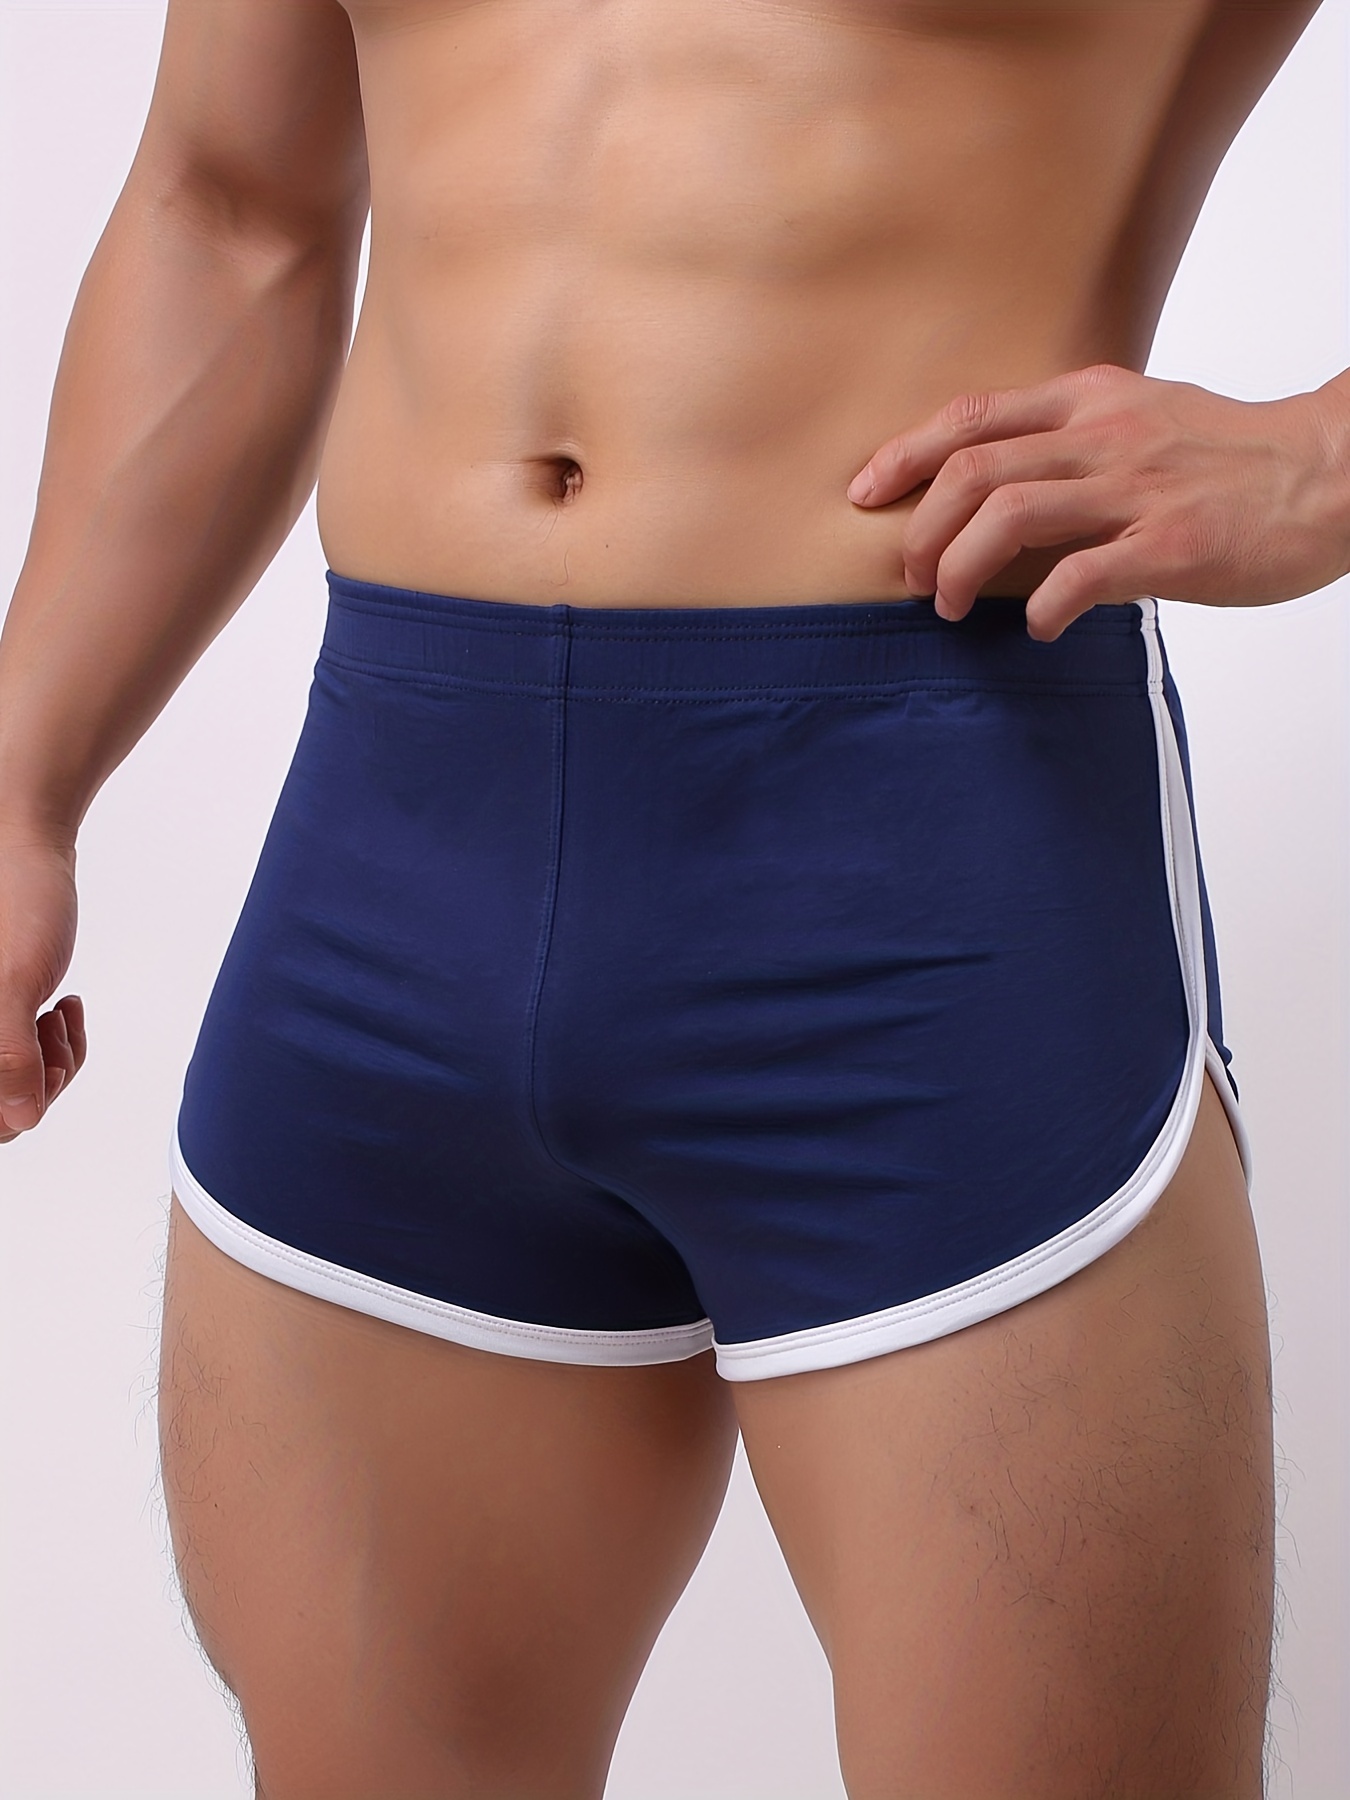 Men's U Convex Opening Design Boxers, Men High Waist Briefs,Tummy Control  Underwear Mens Boxer Shorts,A-Medium